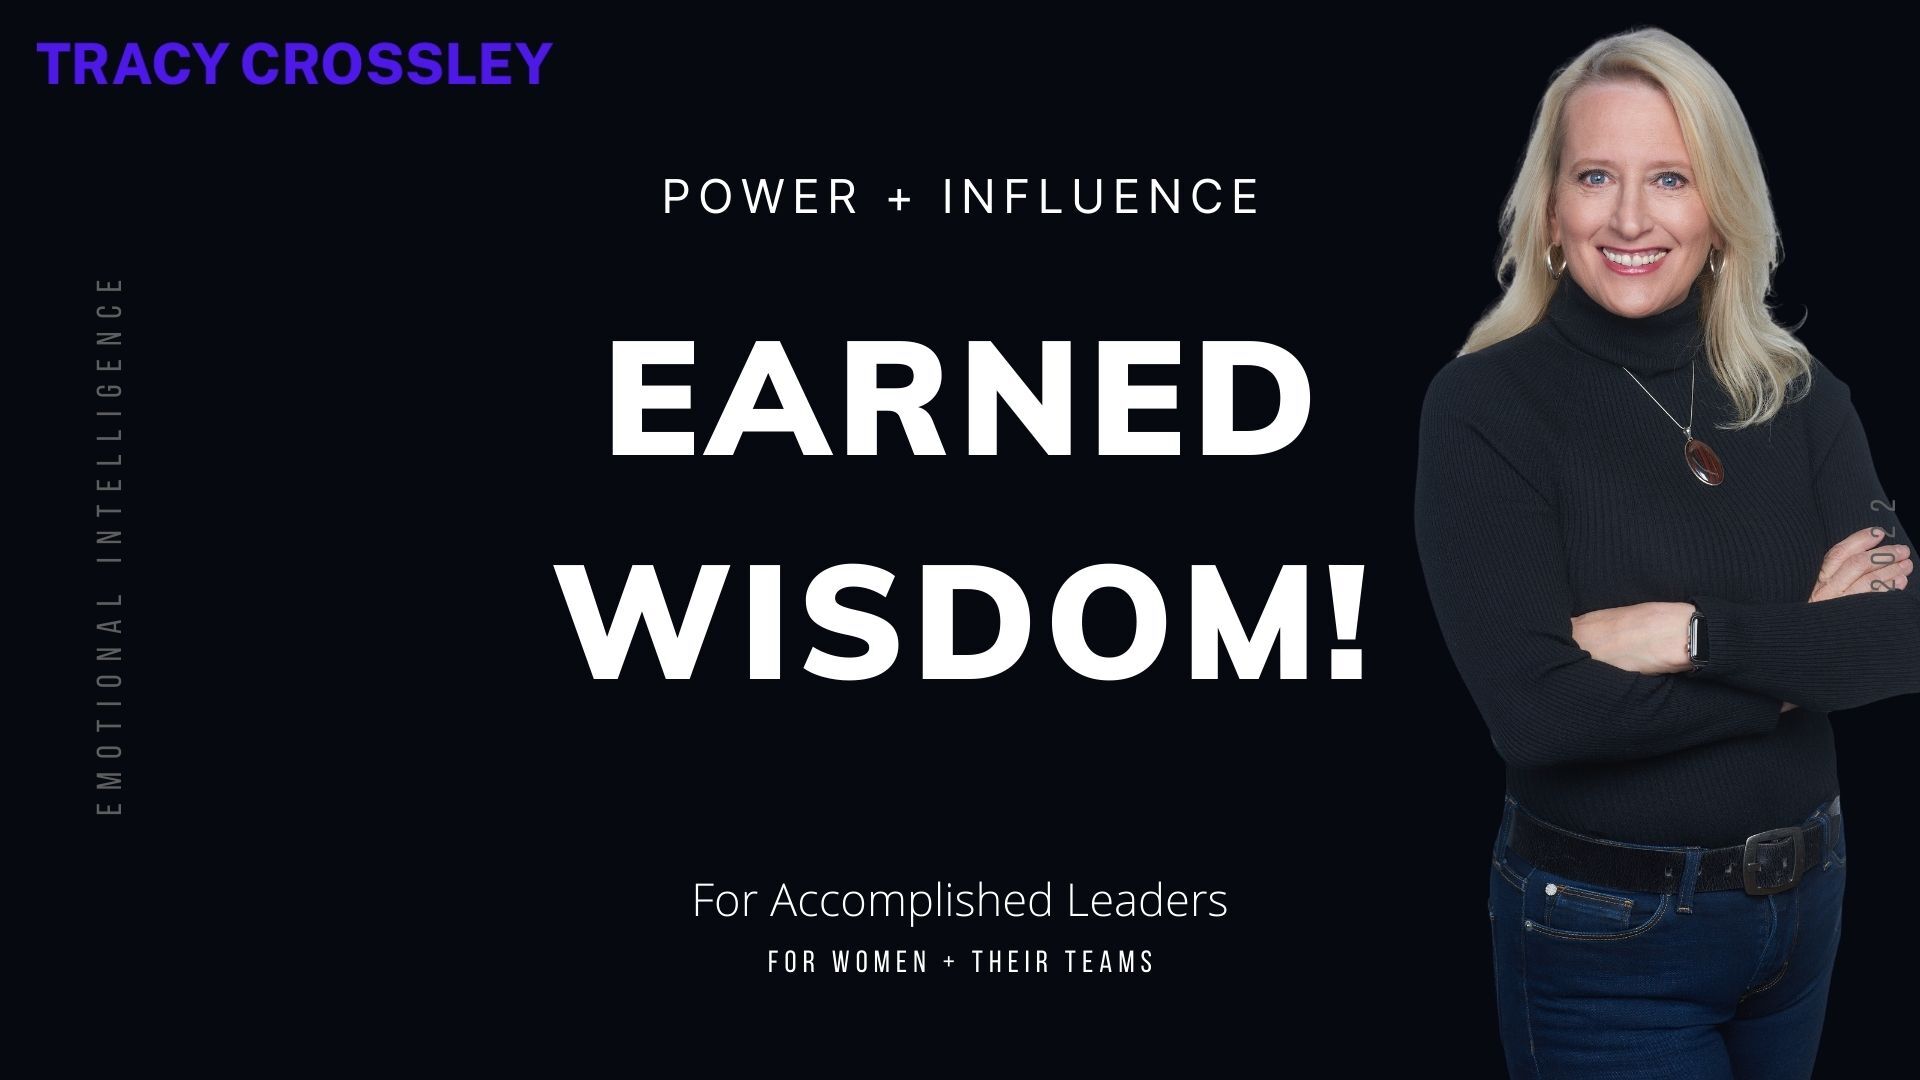 Earned Wisdom! For Accomplished Leaders